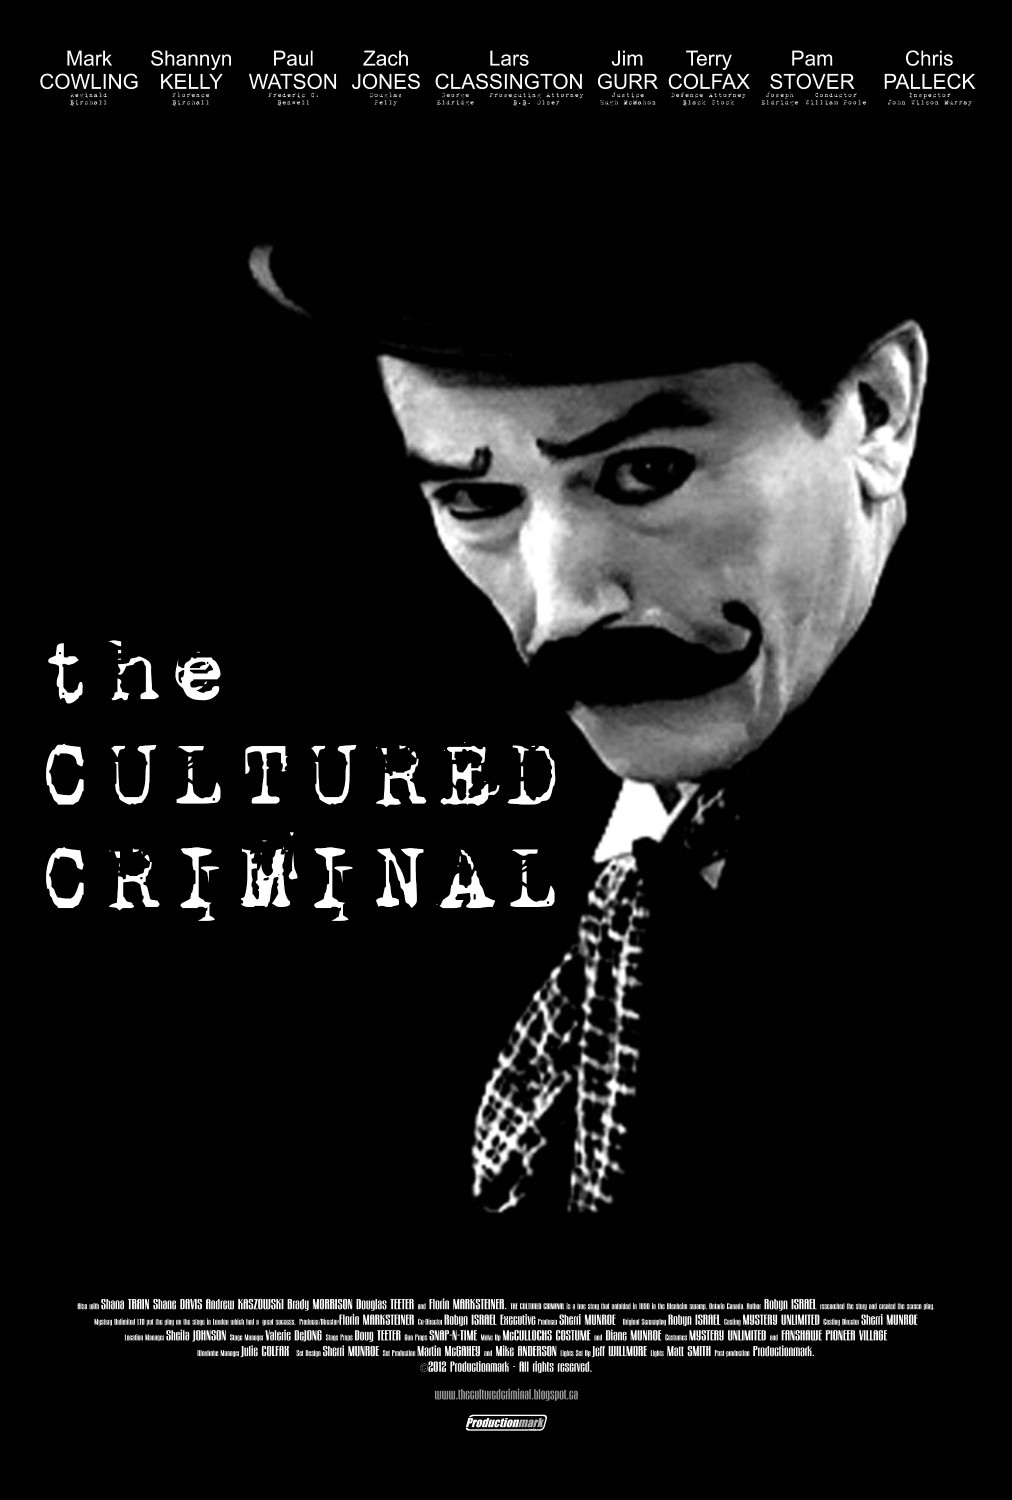 Productionmark-Services-Film-Poster-Design-Short-Film-The-Cultured-Criminal